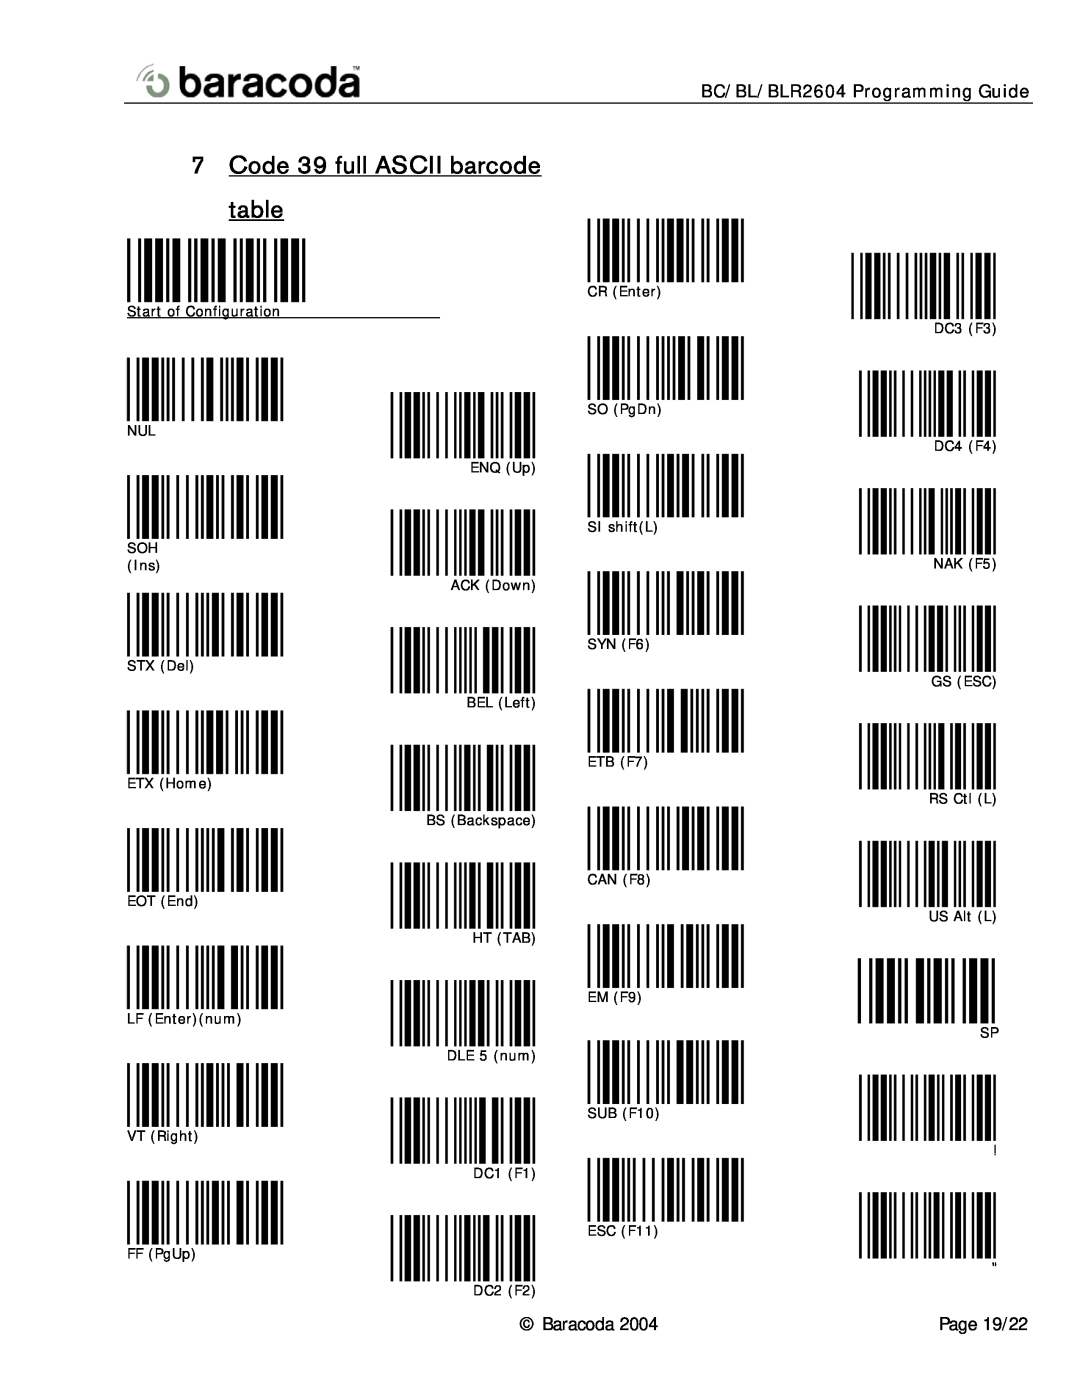 Baracoda BC2604, BL2604 Code 39 full ASCII barcode table, BC/BL/BLR2604 Programming Guide, LF Enternum VT Right FF PgUp 